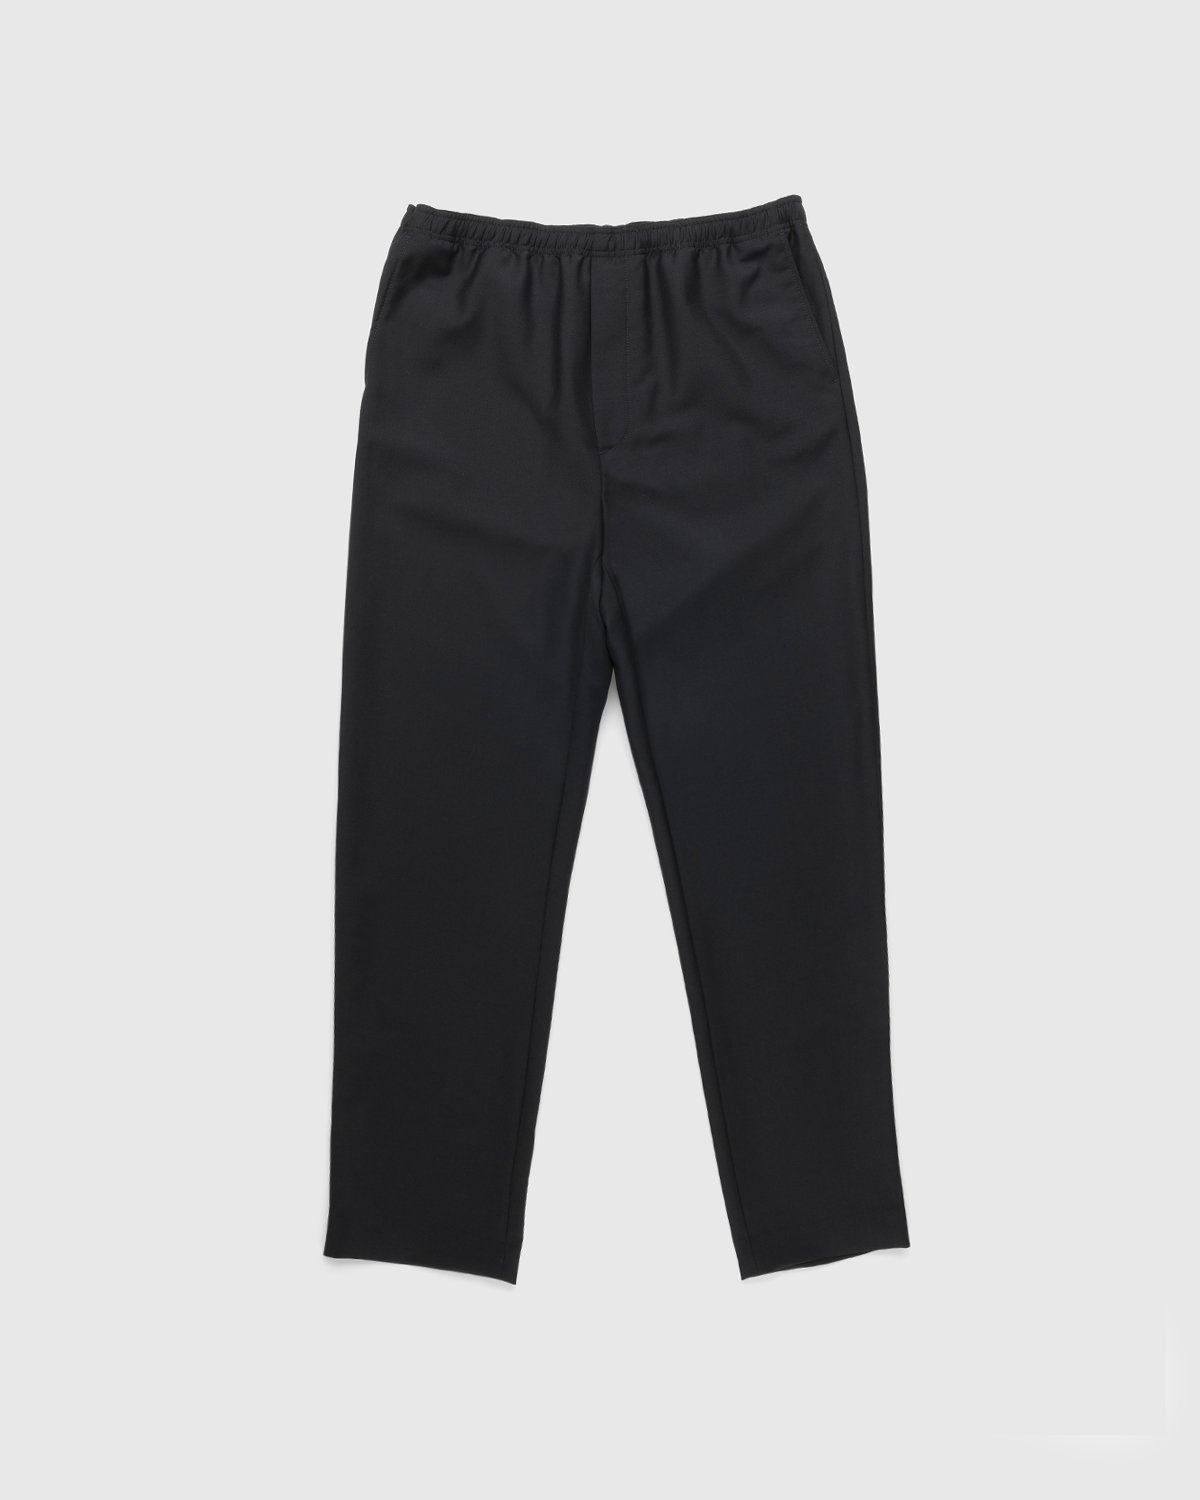 Acne Studios – Mohair Blend Drawstring Trousers Black - Trousers - Black - Image 1